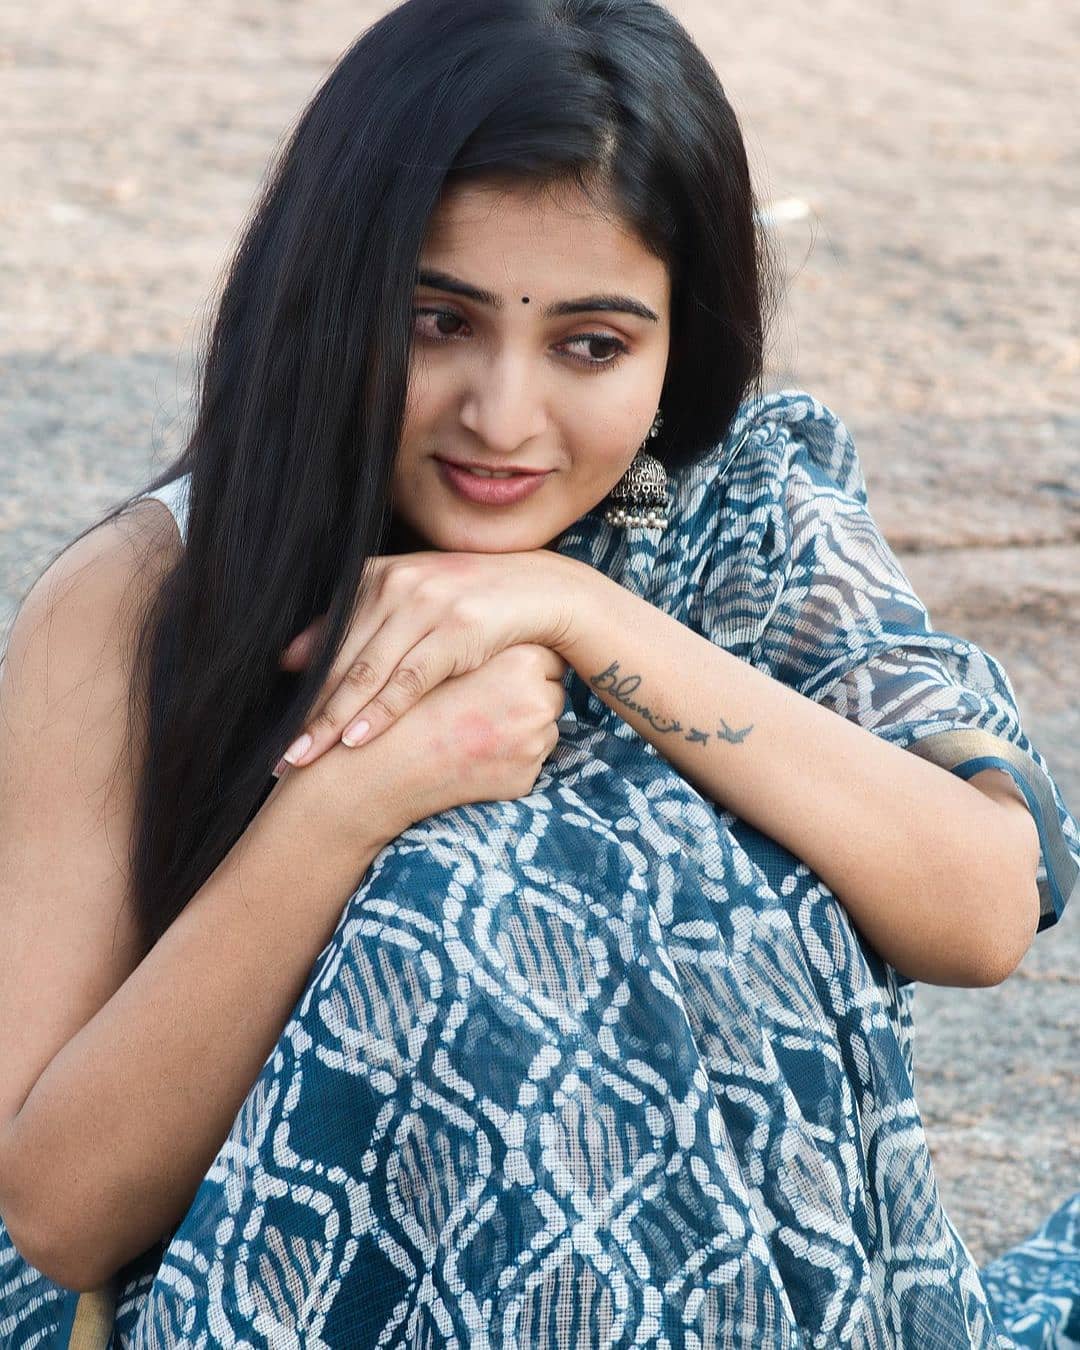 Vakeelsaab fame Actress Ananya Nagalla Gorgeous Stills From Photoshoot.